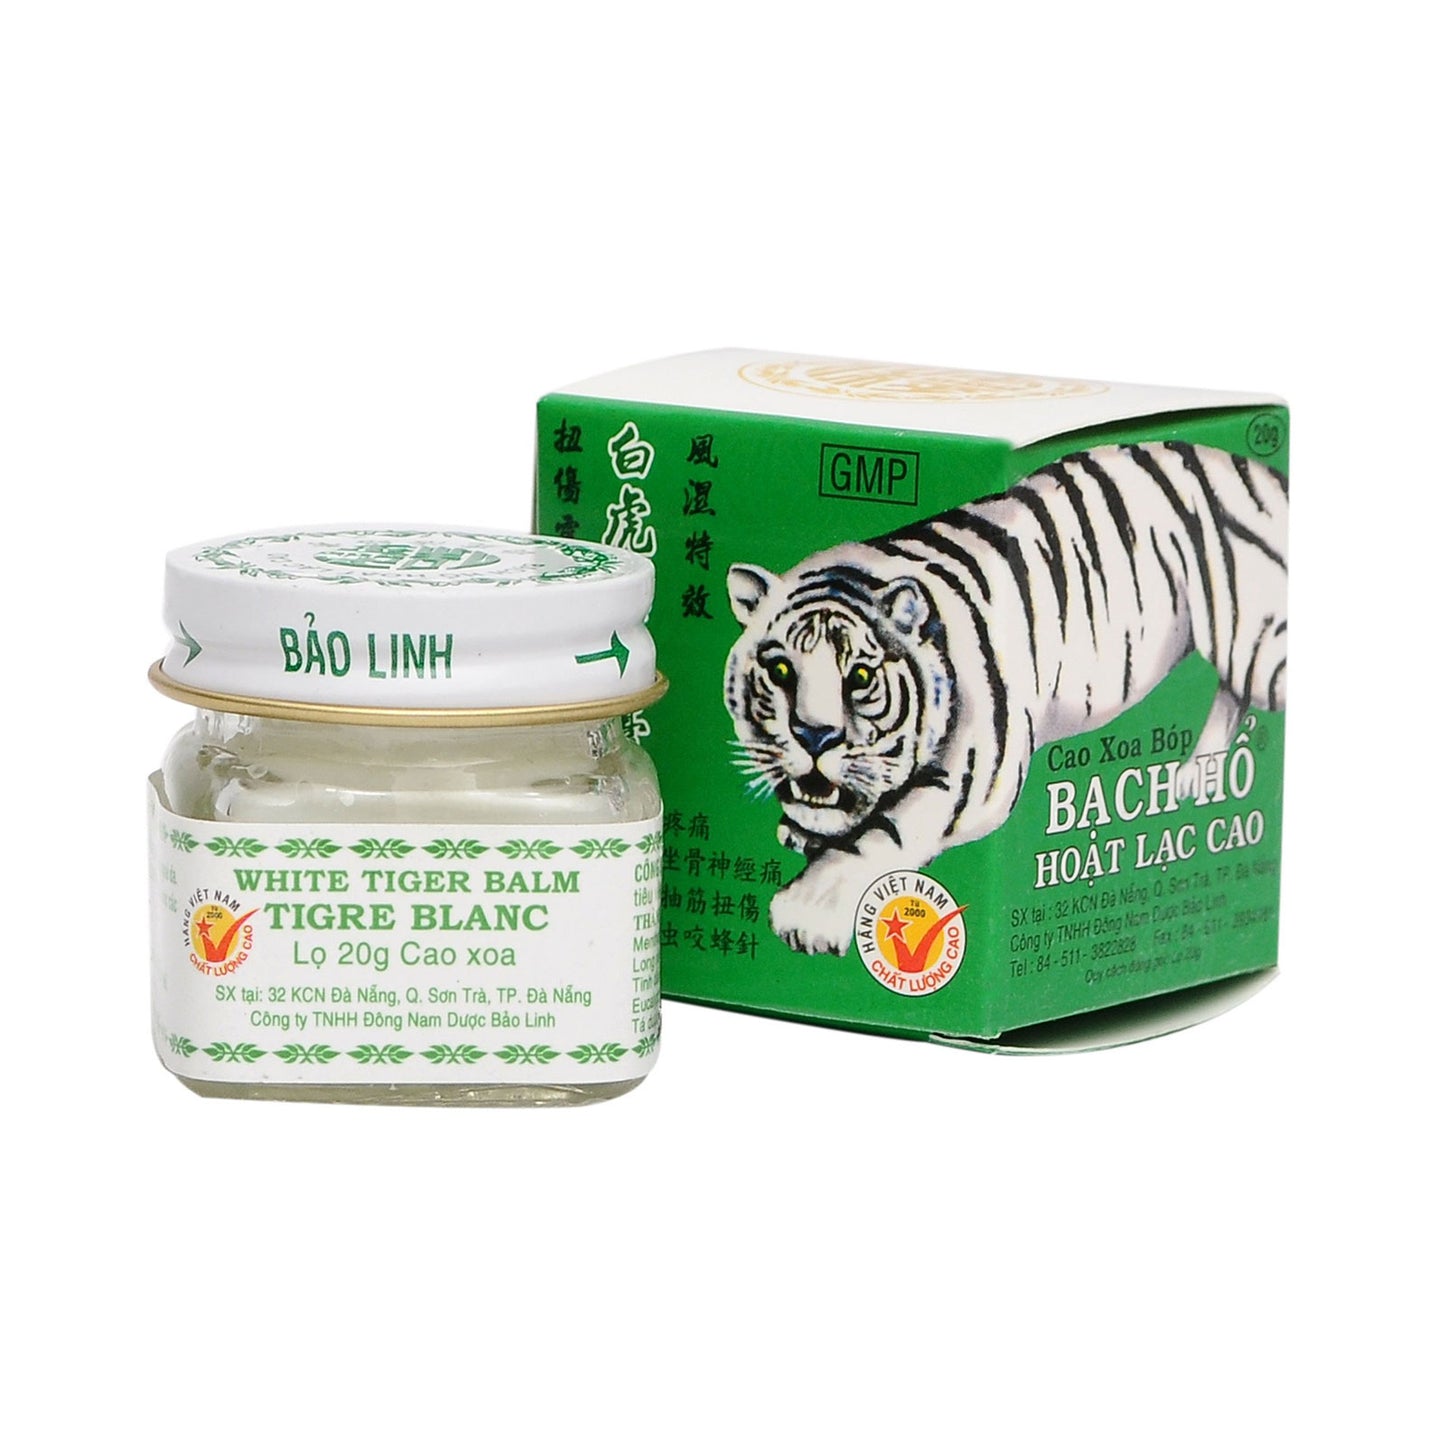 Bach Ho Vietnam 20g white tiger balm for Headache, Muscular Pains